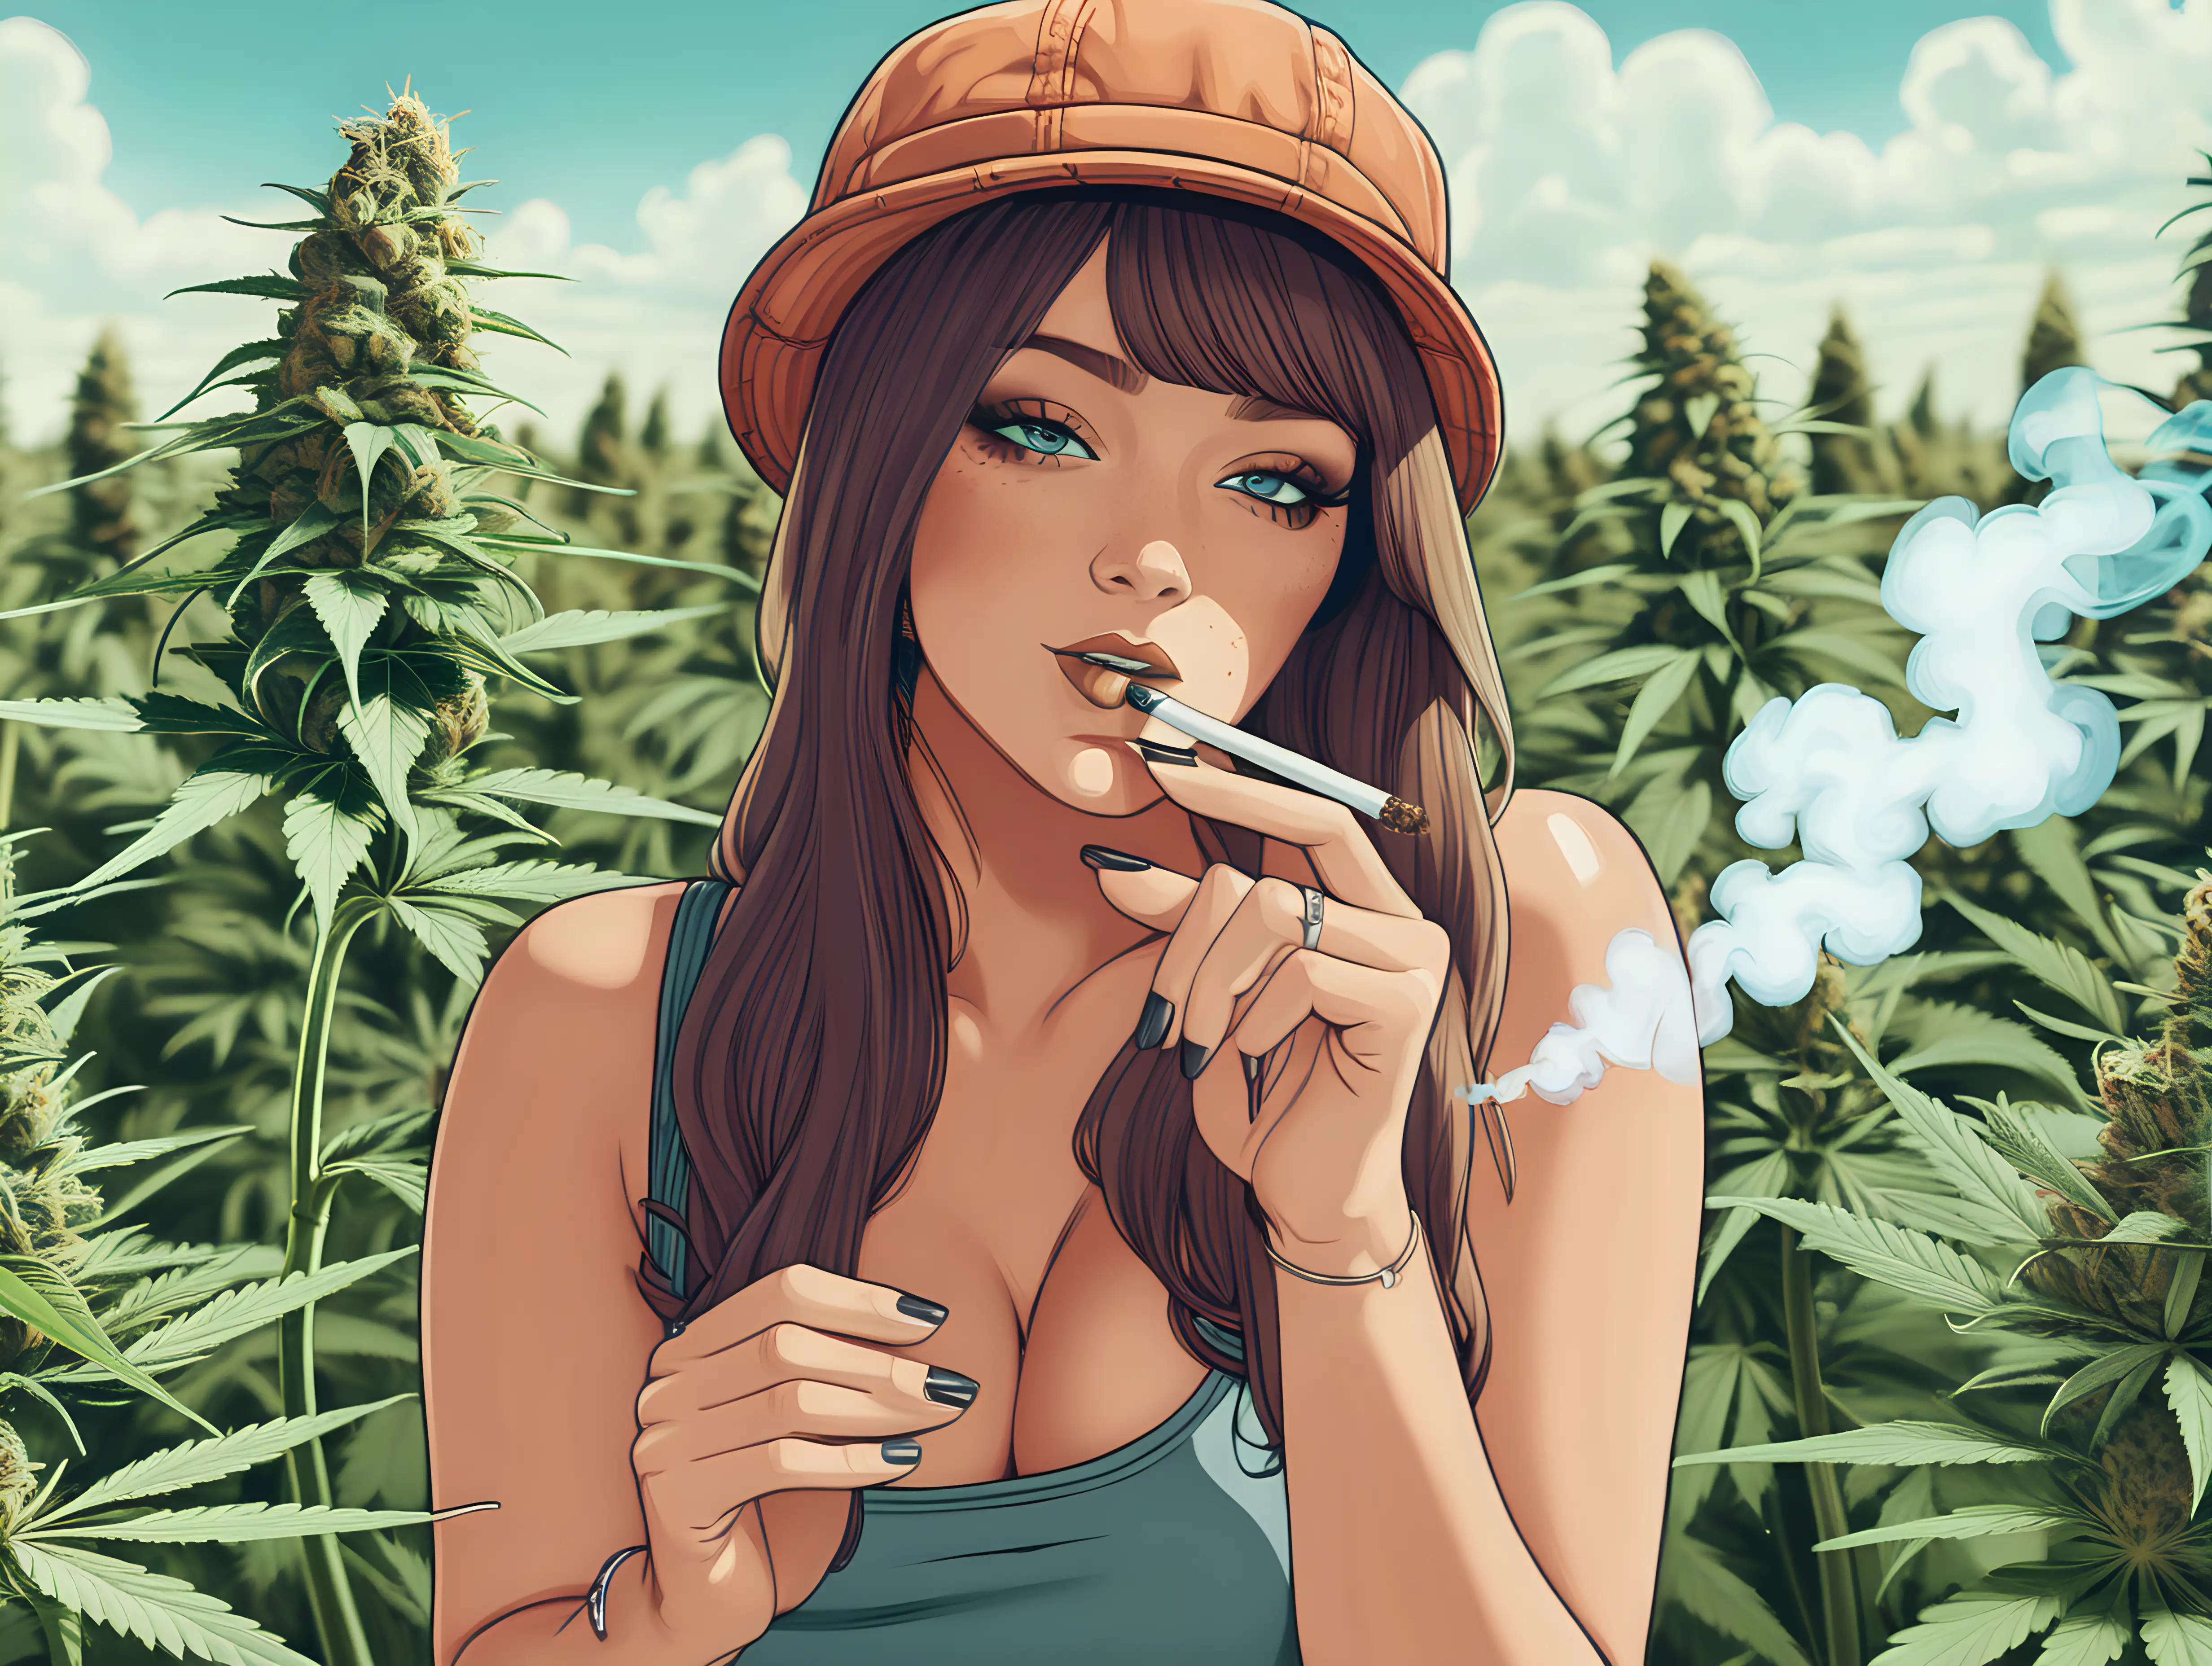 Stylish Woman Enjoying Cannabis in a Natural Setting